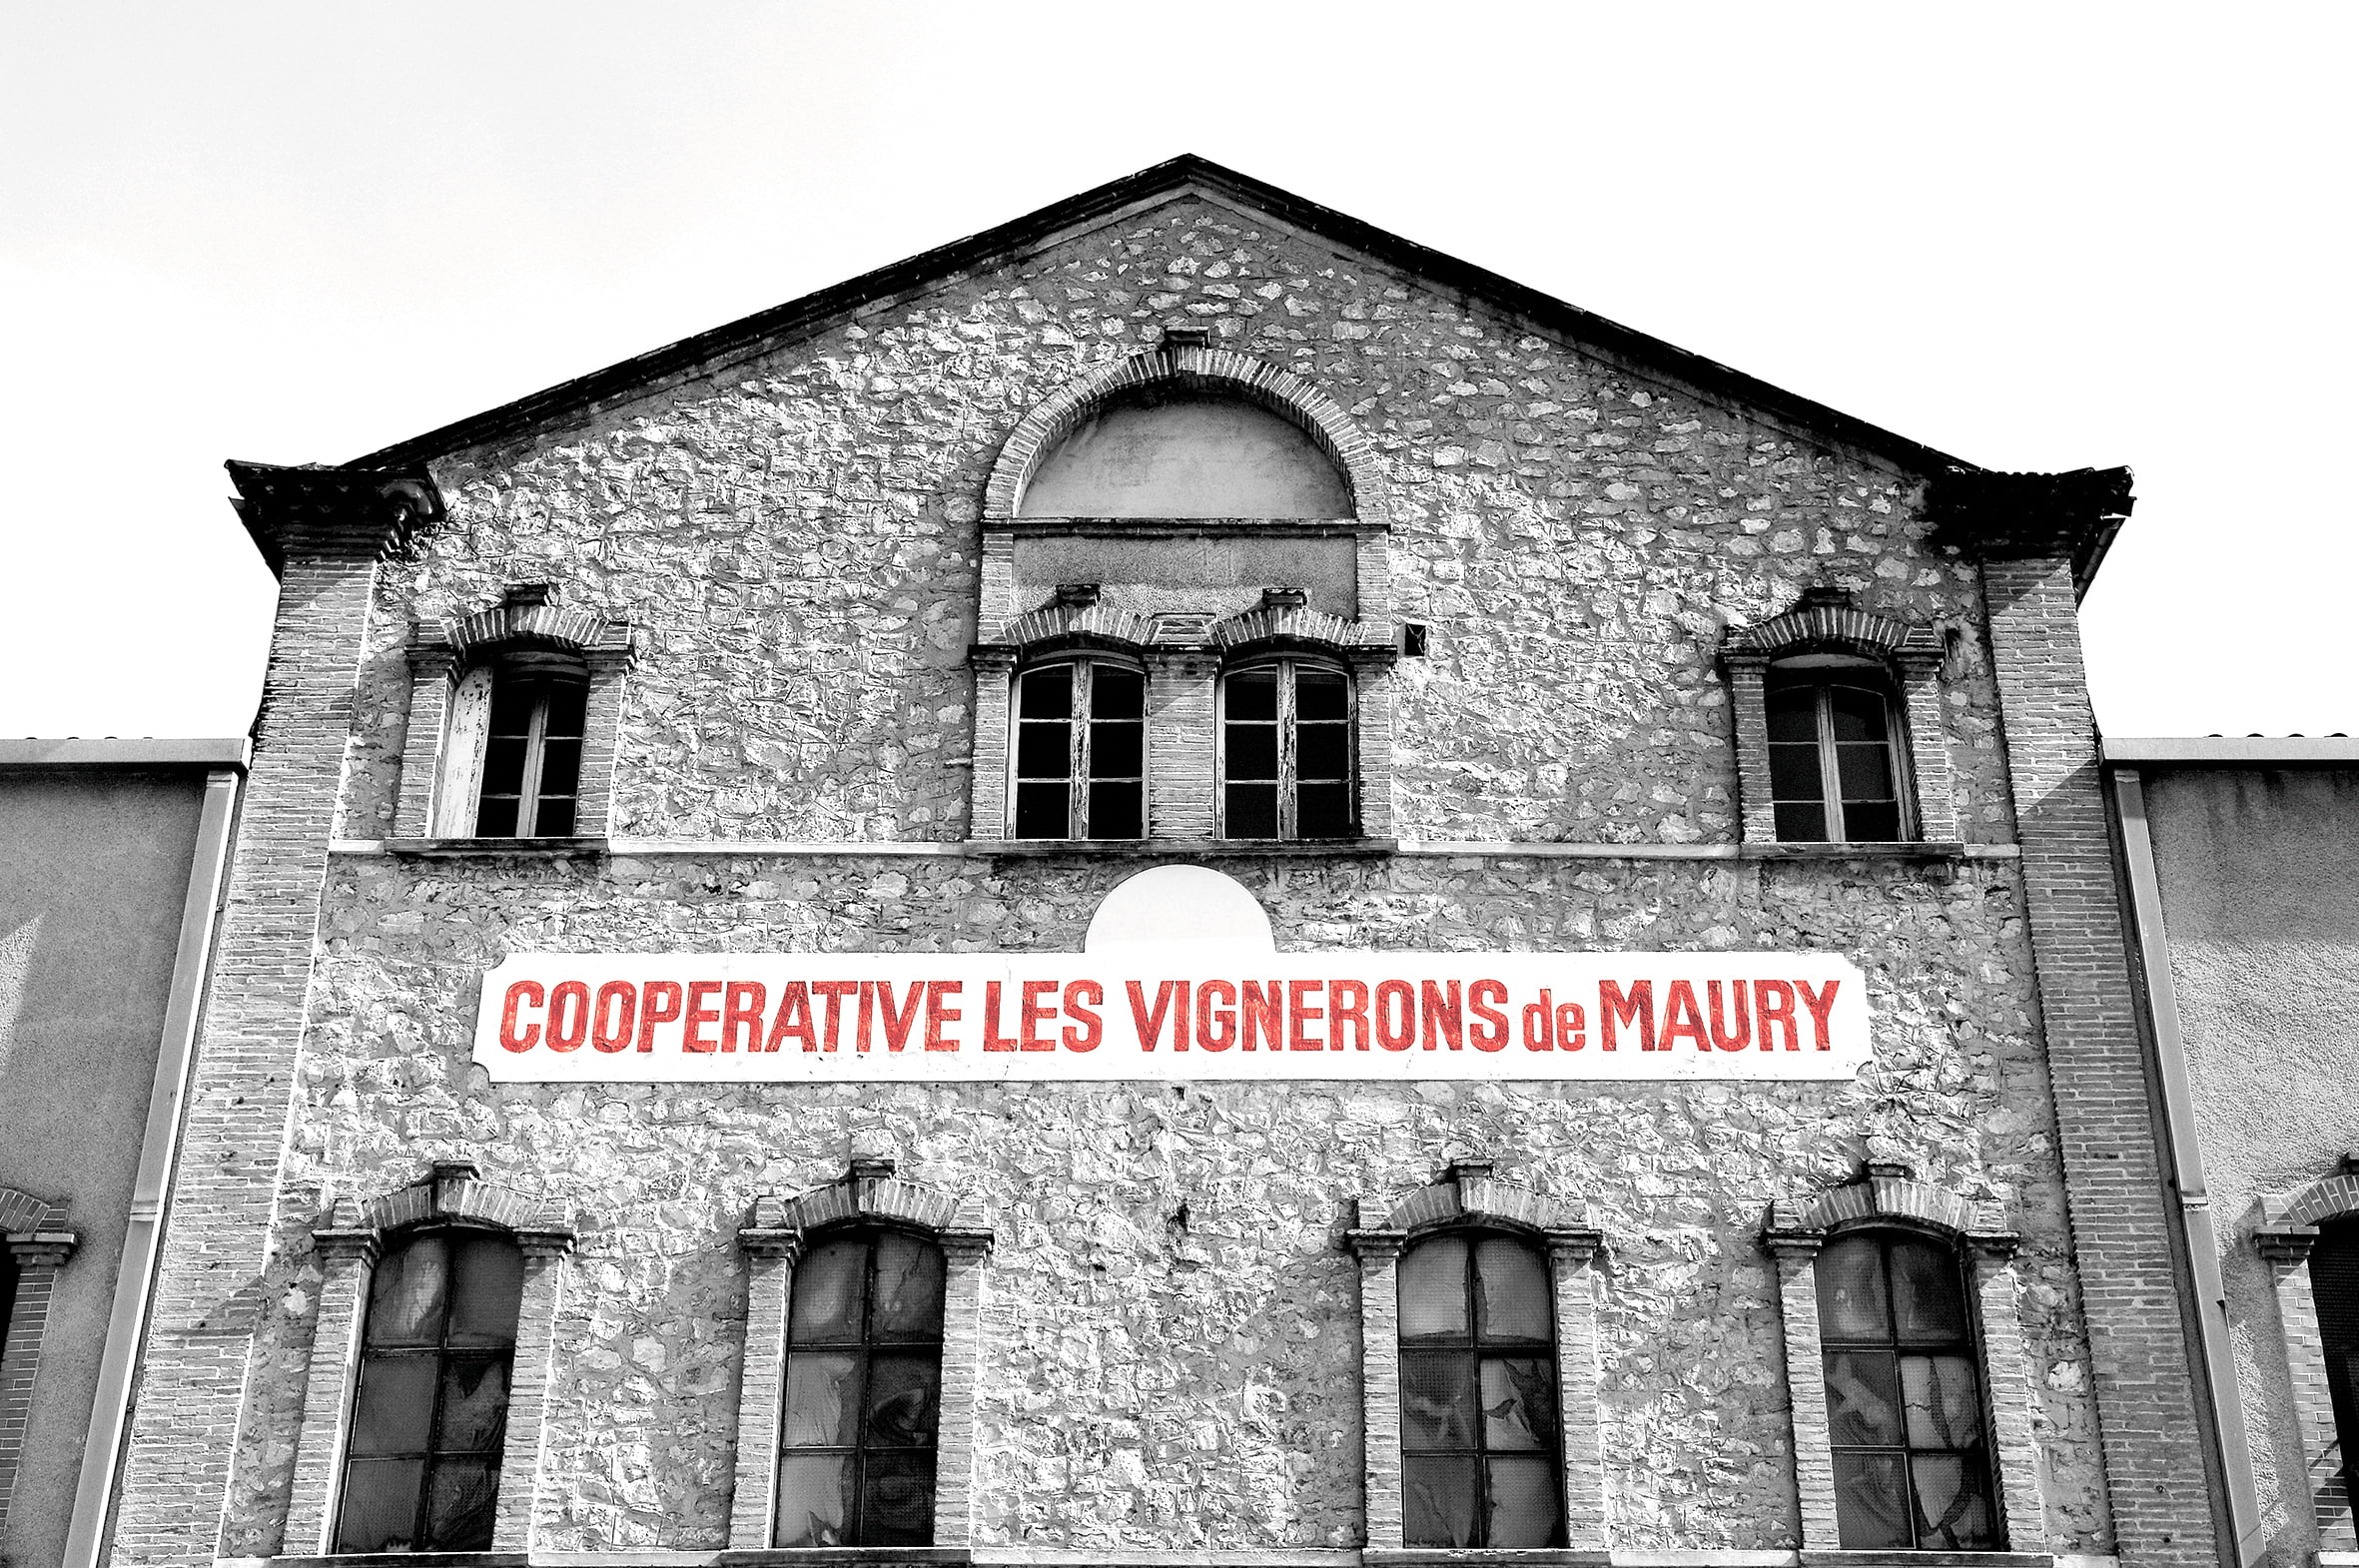 VIGNERONS DE MAURY - Maury